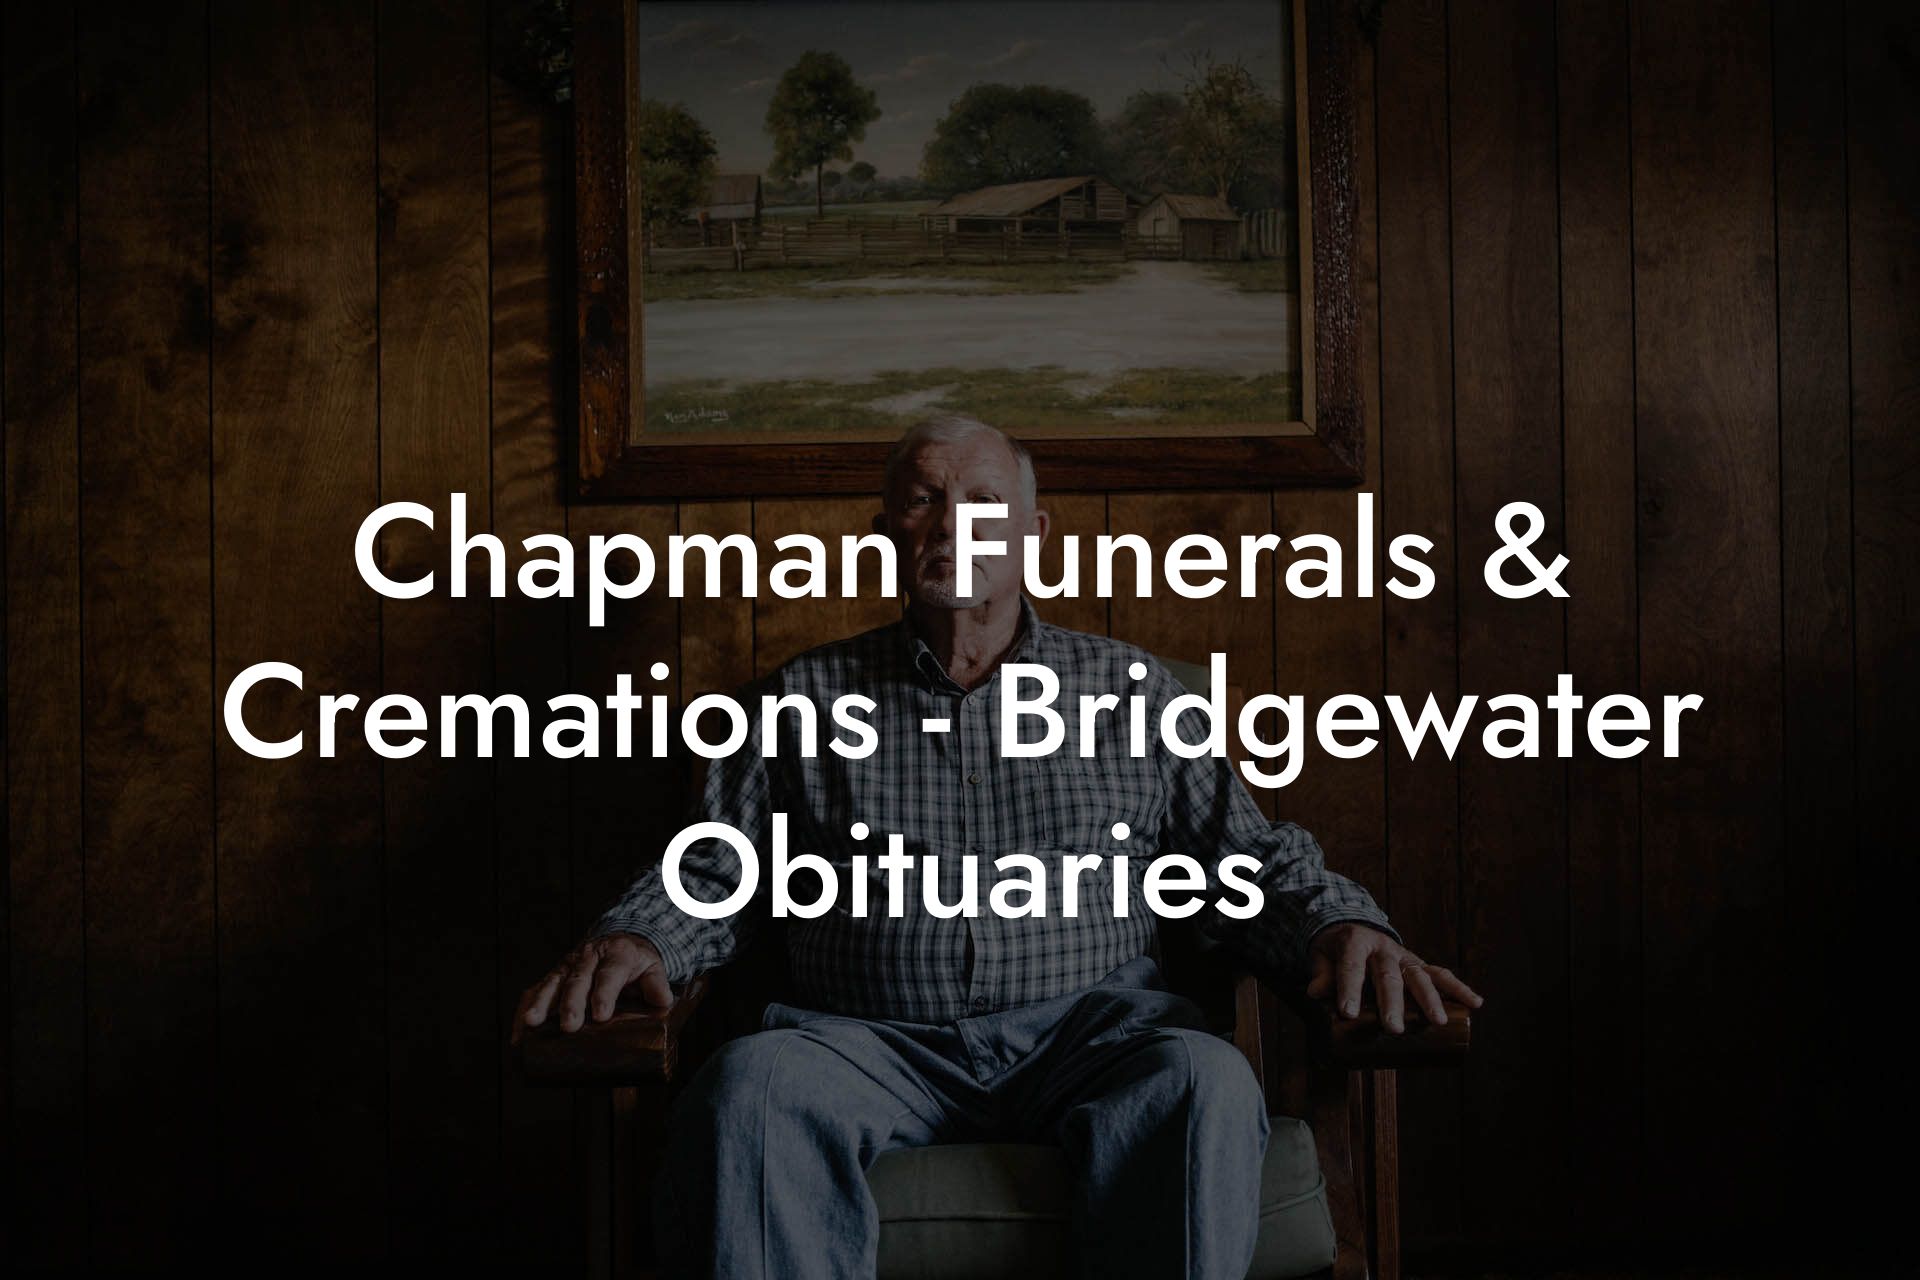 Chapman Funerals & Cremations - Bridgewater Obituaries